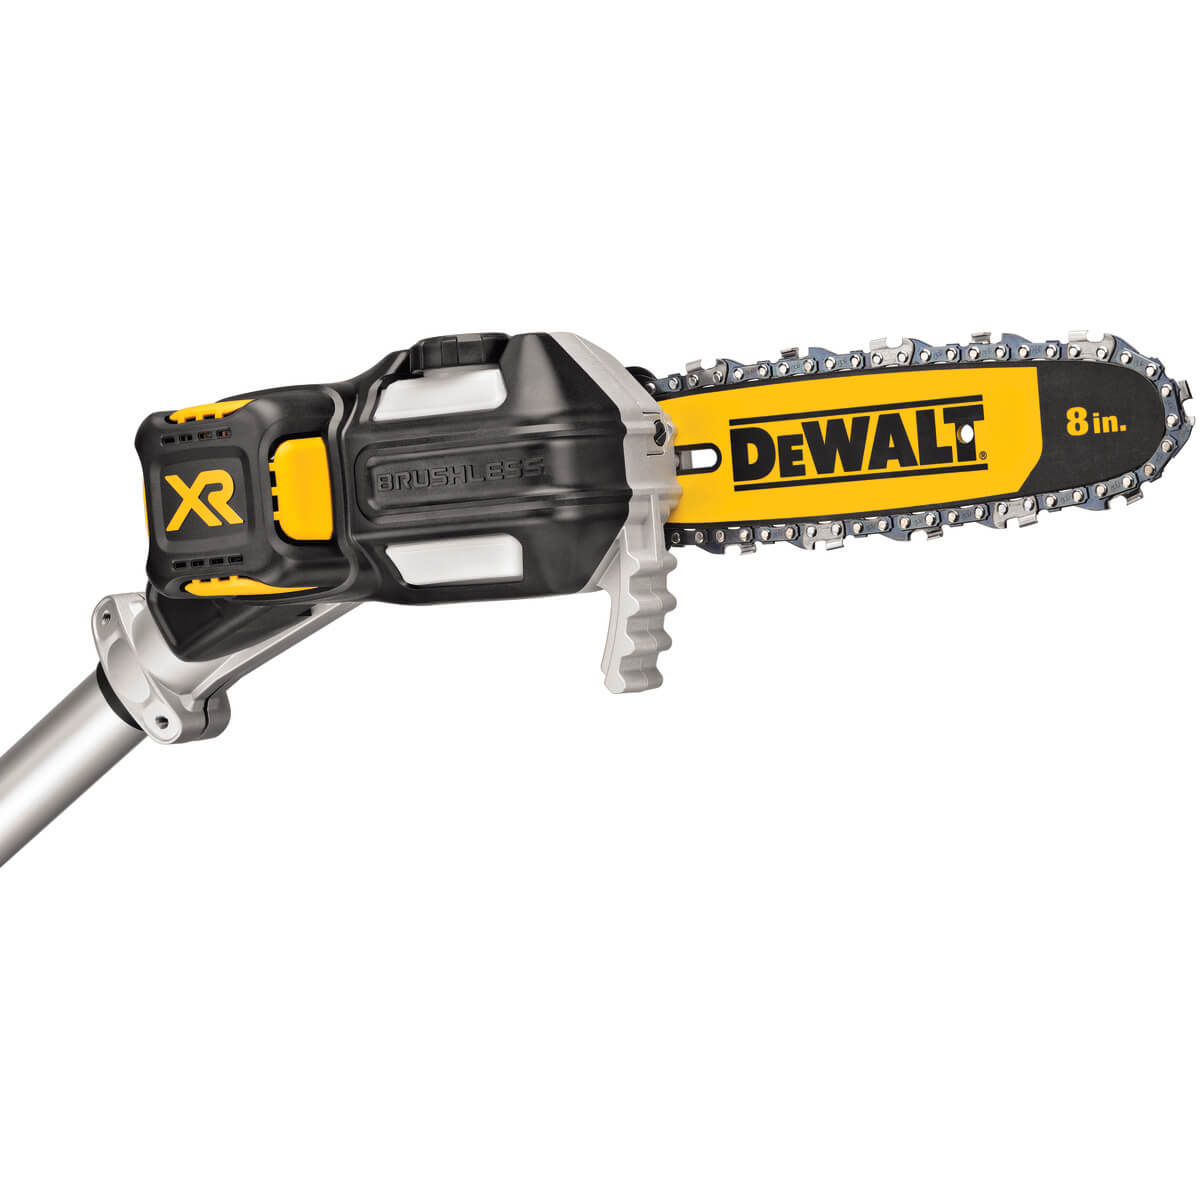 Dewalt DCPS620M1 - 20V MAX* Pole Saw - 4.0AH Kit - wise-line-tools